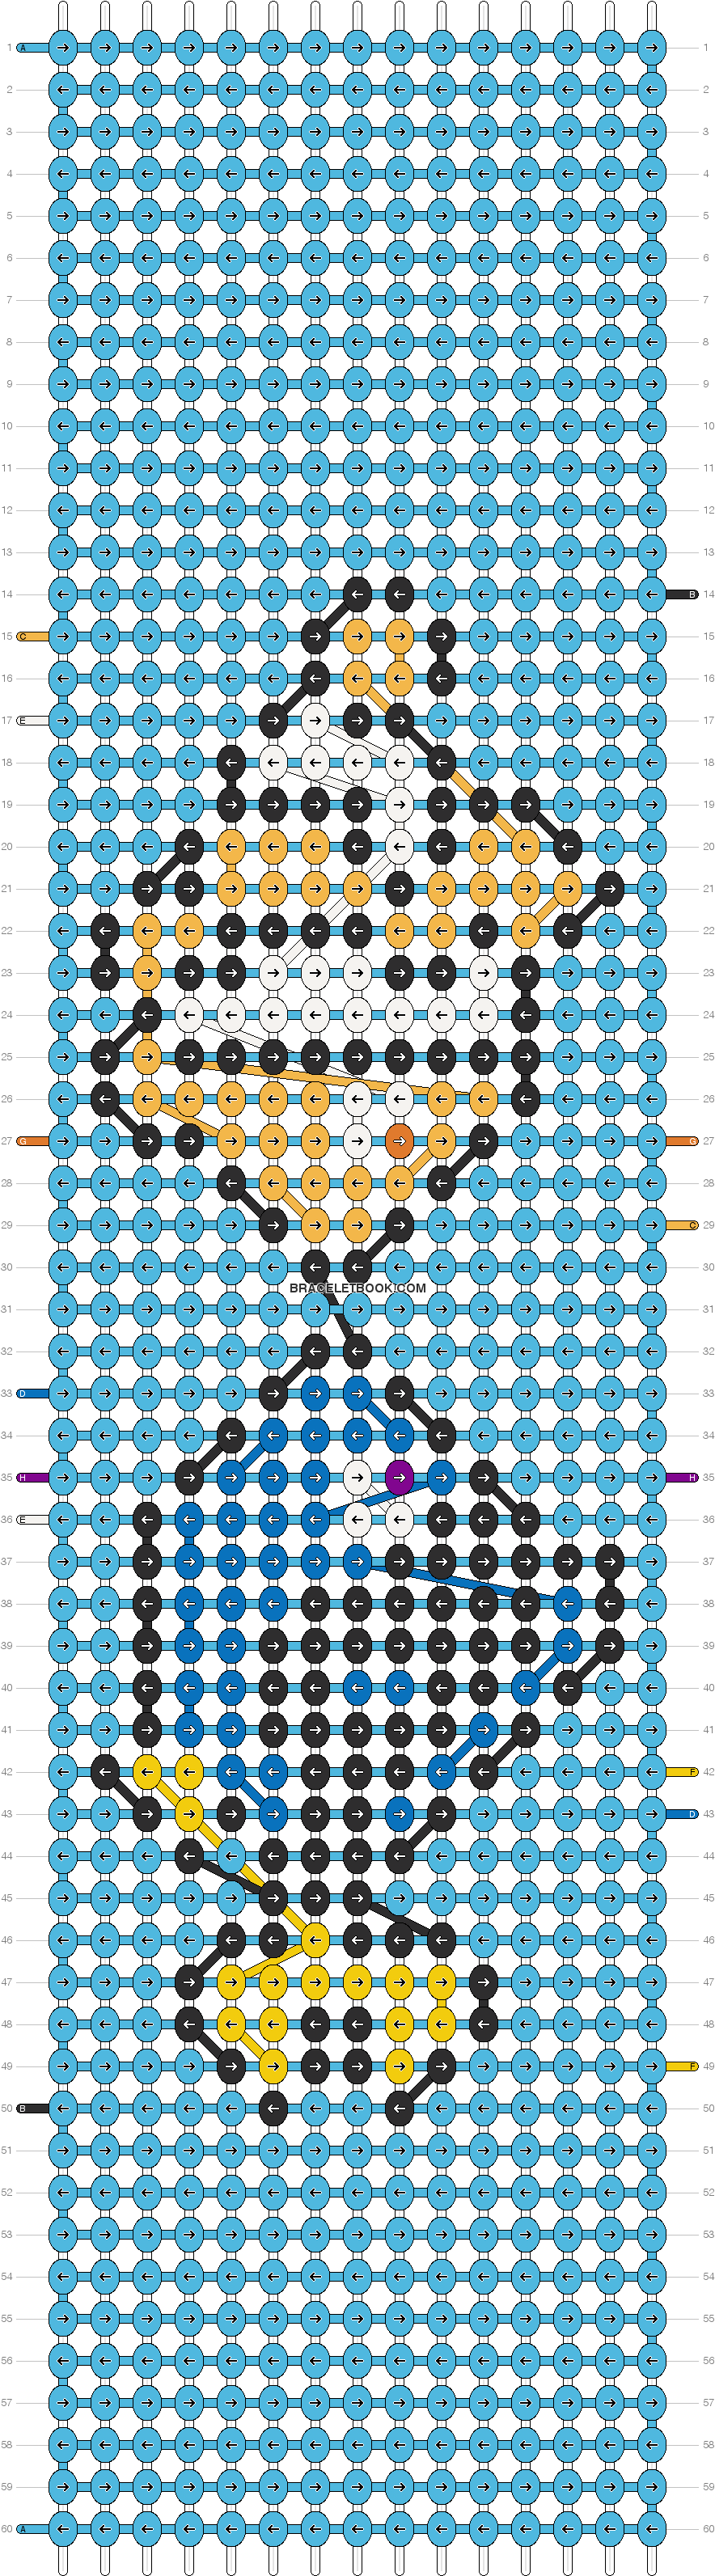 Finding Nemo Friendship Bracelet Pattern Number - Fancy Friendship Bracelet Pattern (896x3192), Png Download